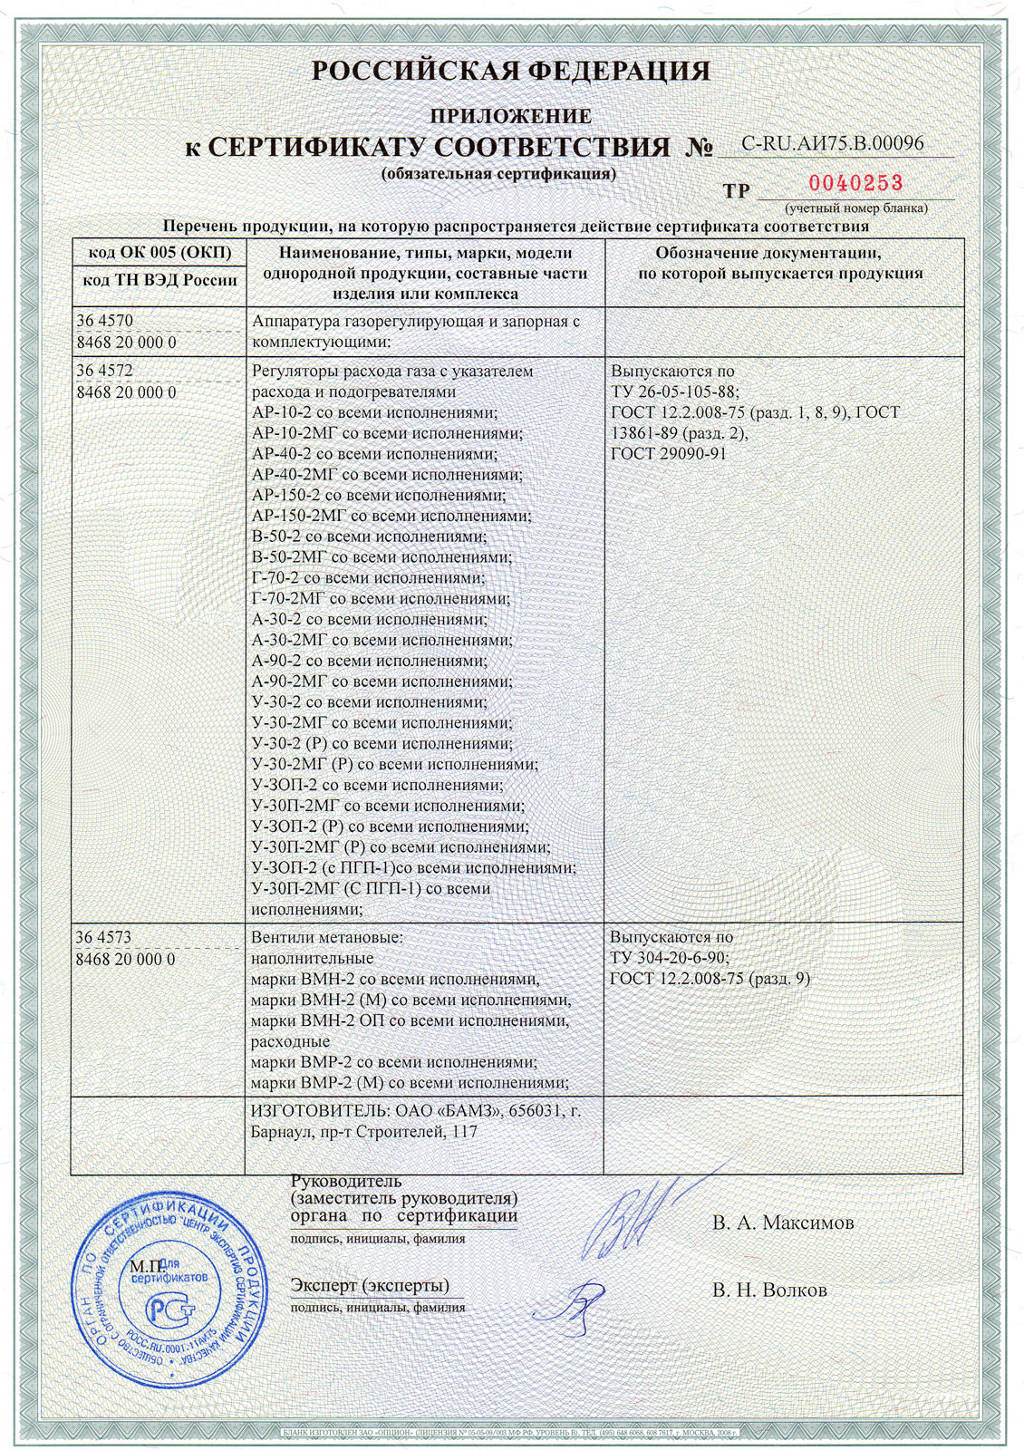 Сертификат на регуряторы БАМЗ (приложение 1)